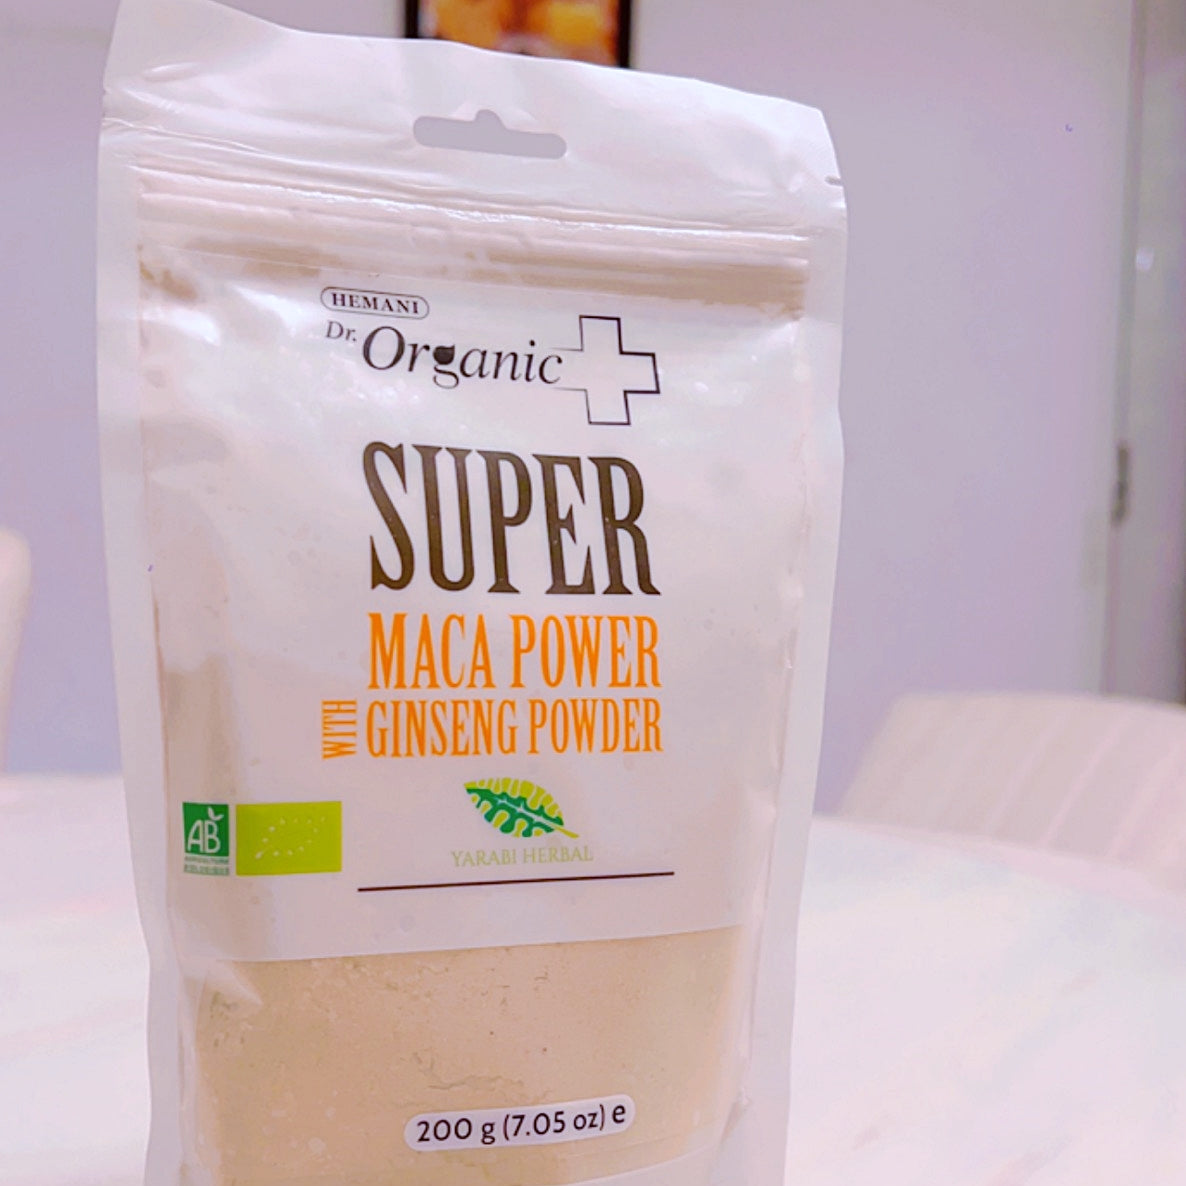 Super Maca Powder with Ginseng Powder